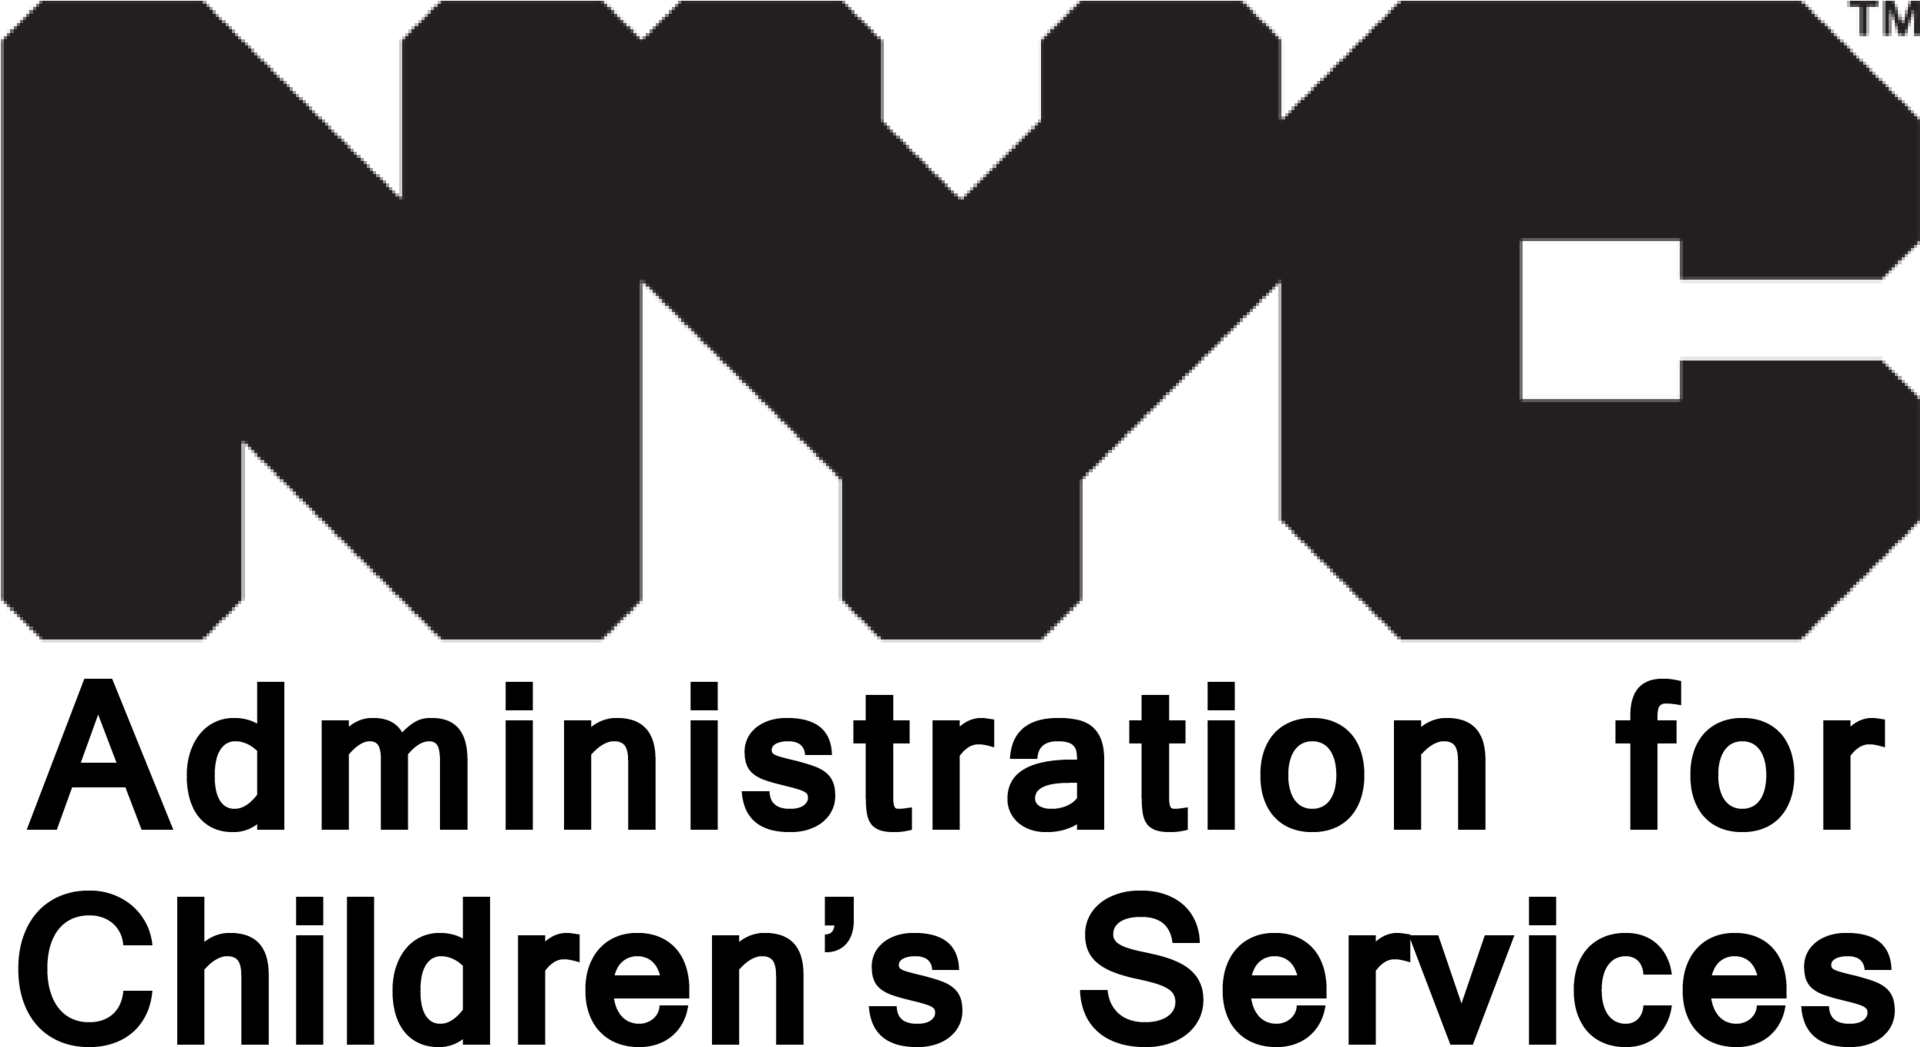 New York City Administration For Children's Services logo